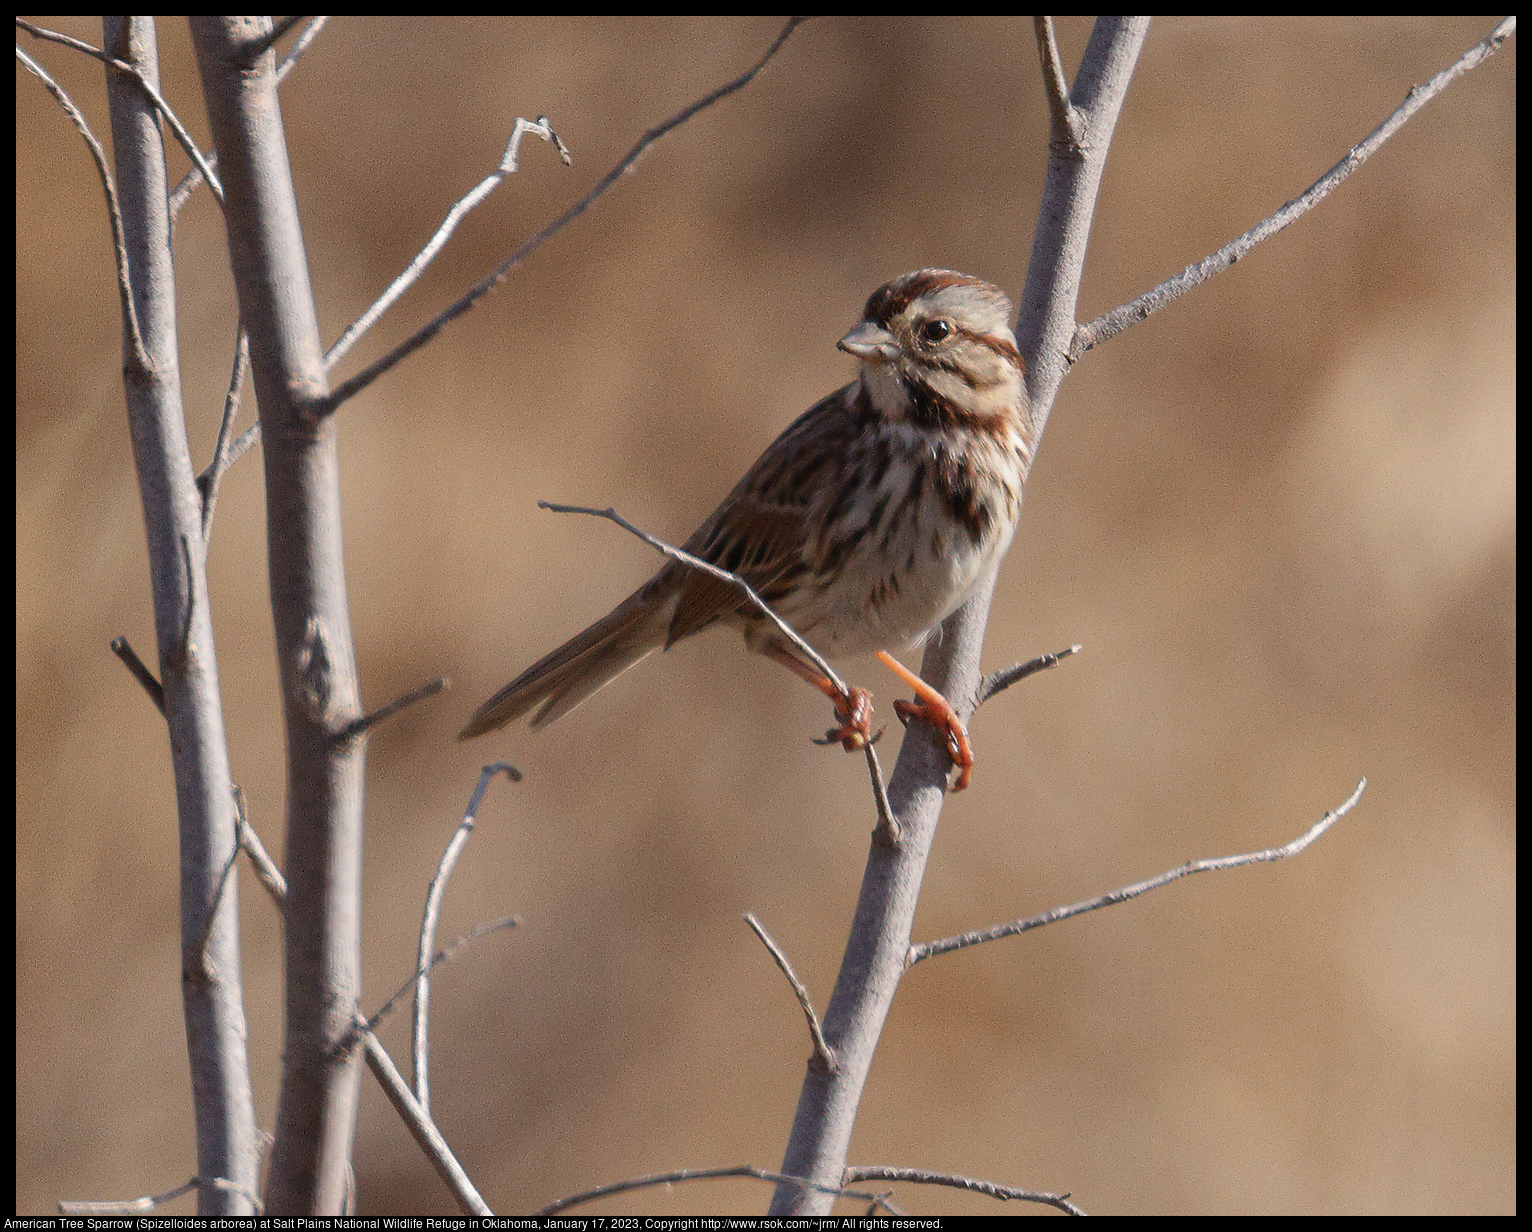 American Tree Sparrow (Spizelloides arborea) at Salt Plains National Wildlife Refuge in Oklahoma, January 17, 2023